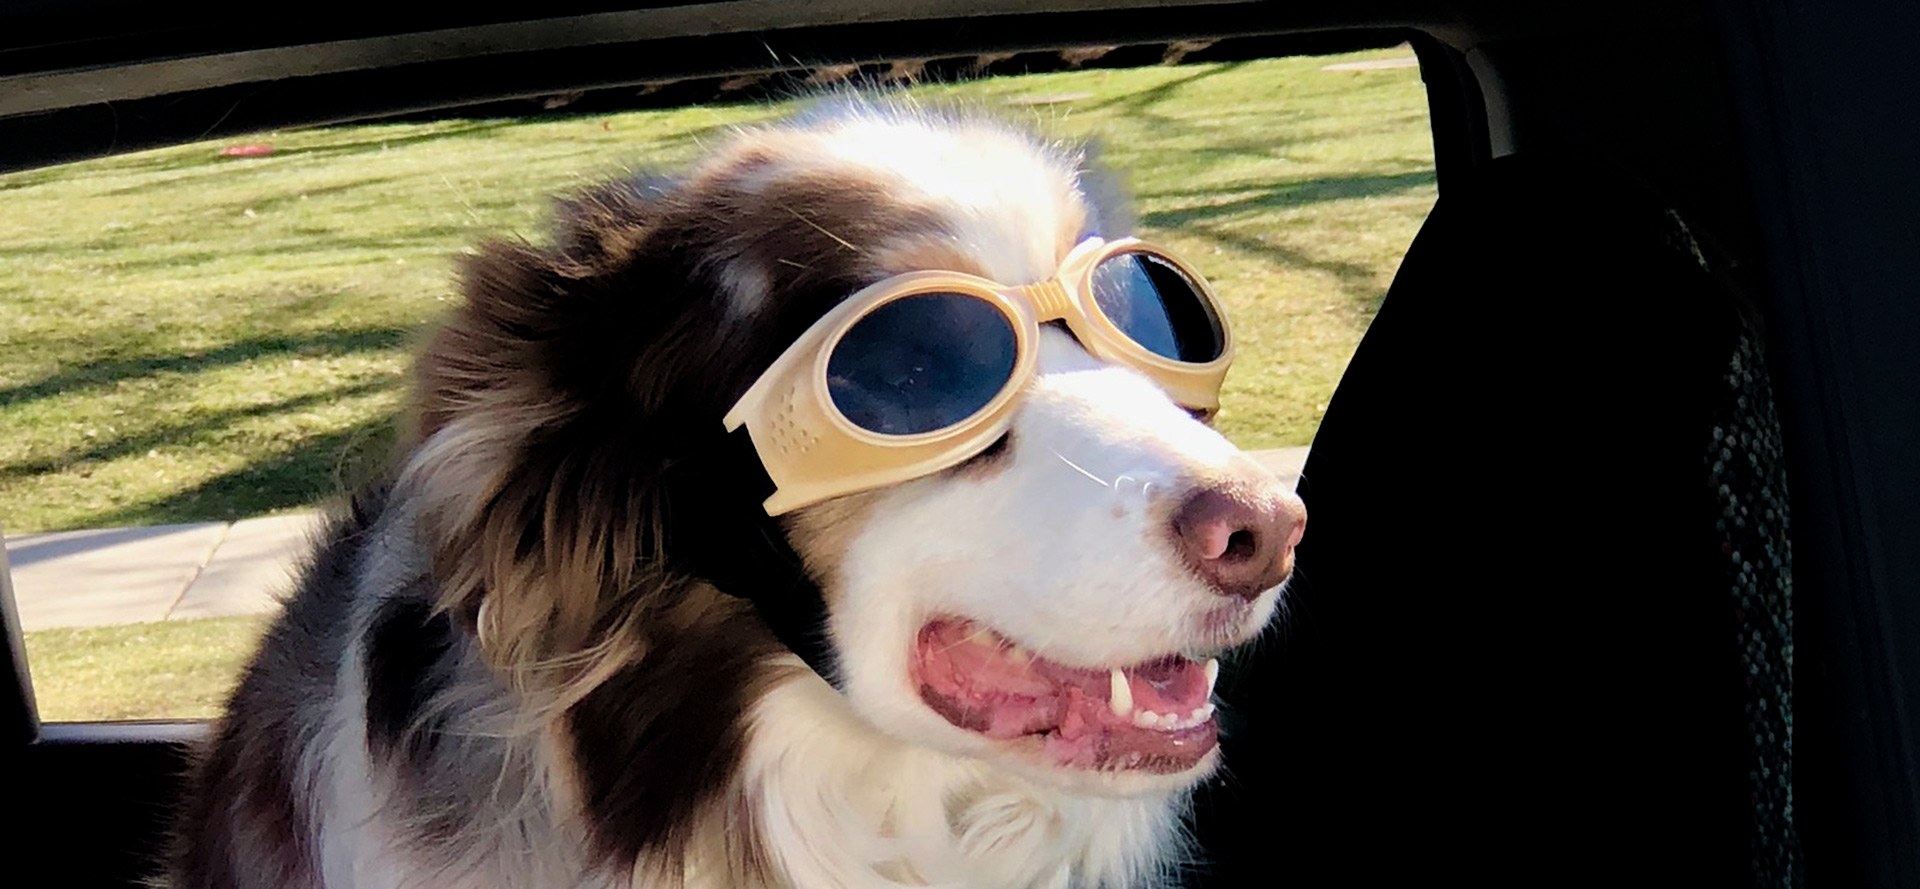 Dog in car in sunglasses.